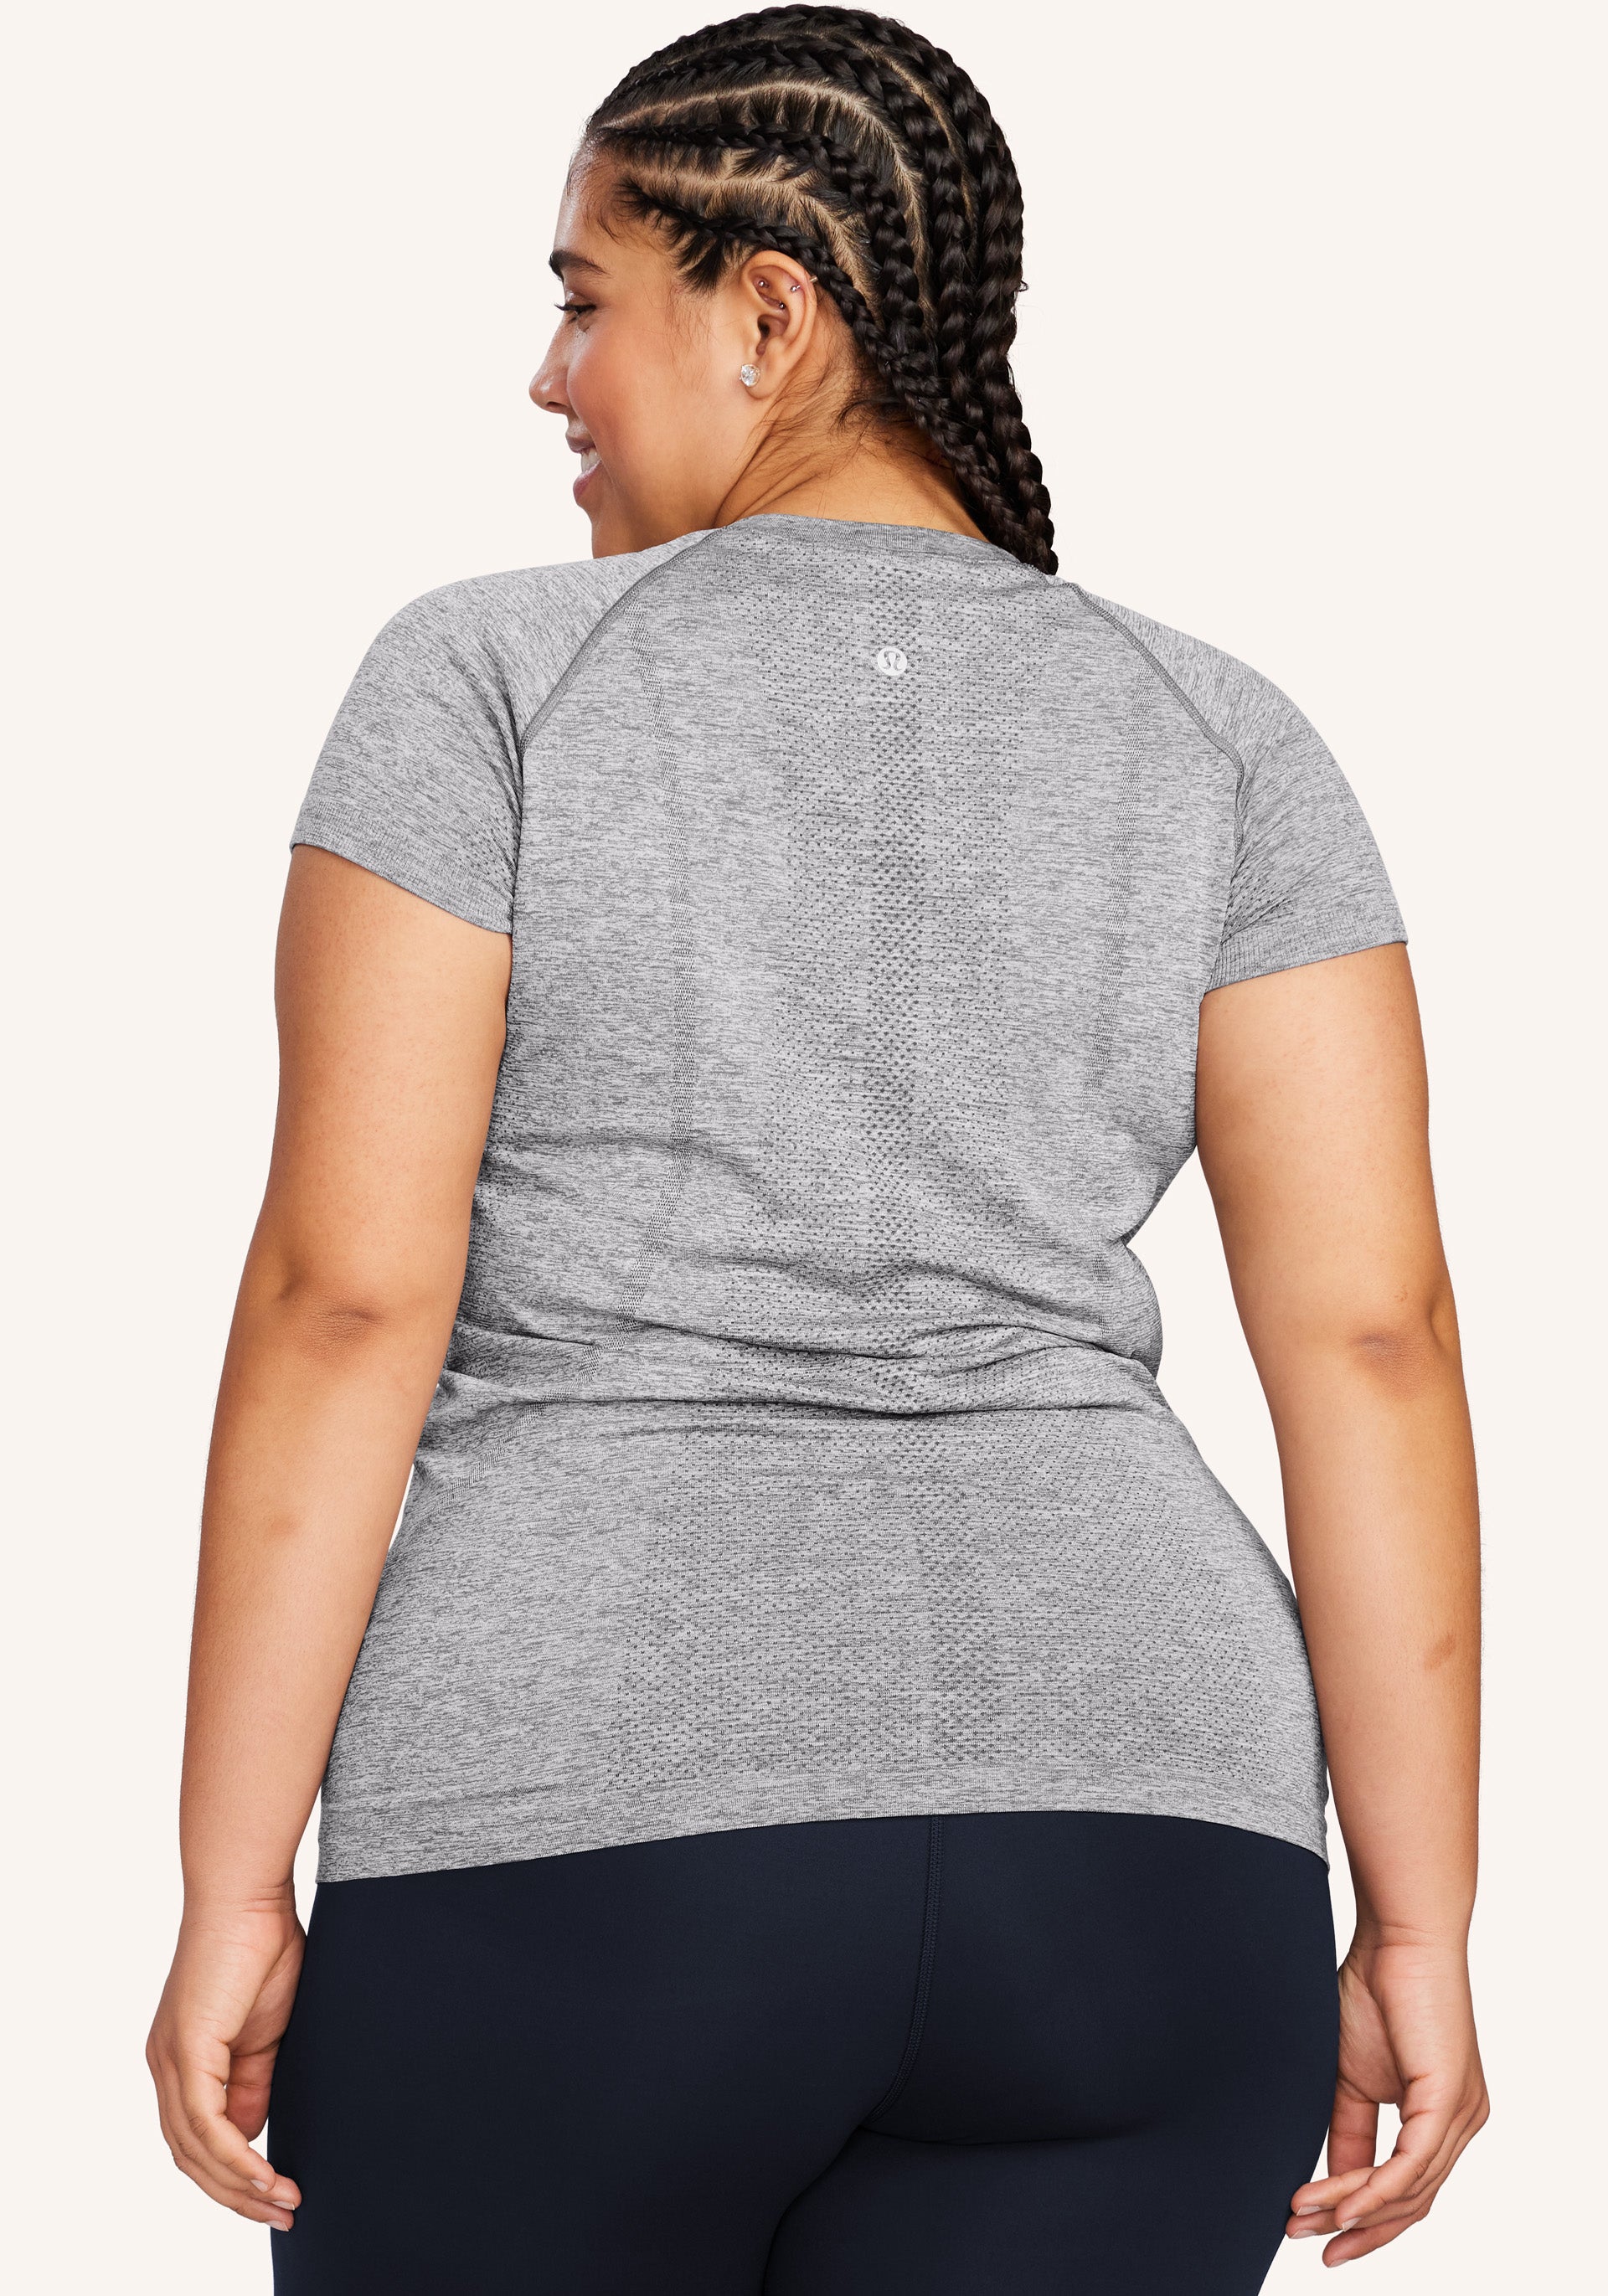 lululemon Swiftly Tech Short-Sleeve Shirt 2.0 - Slate/White